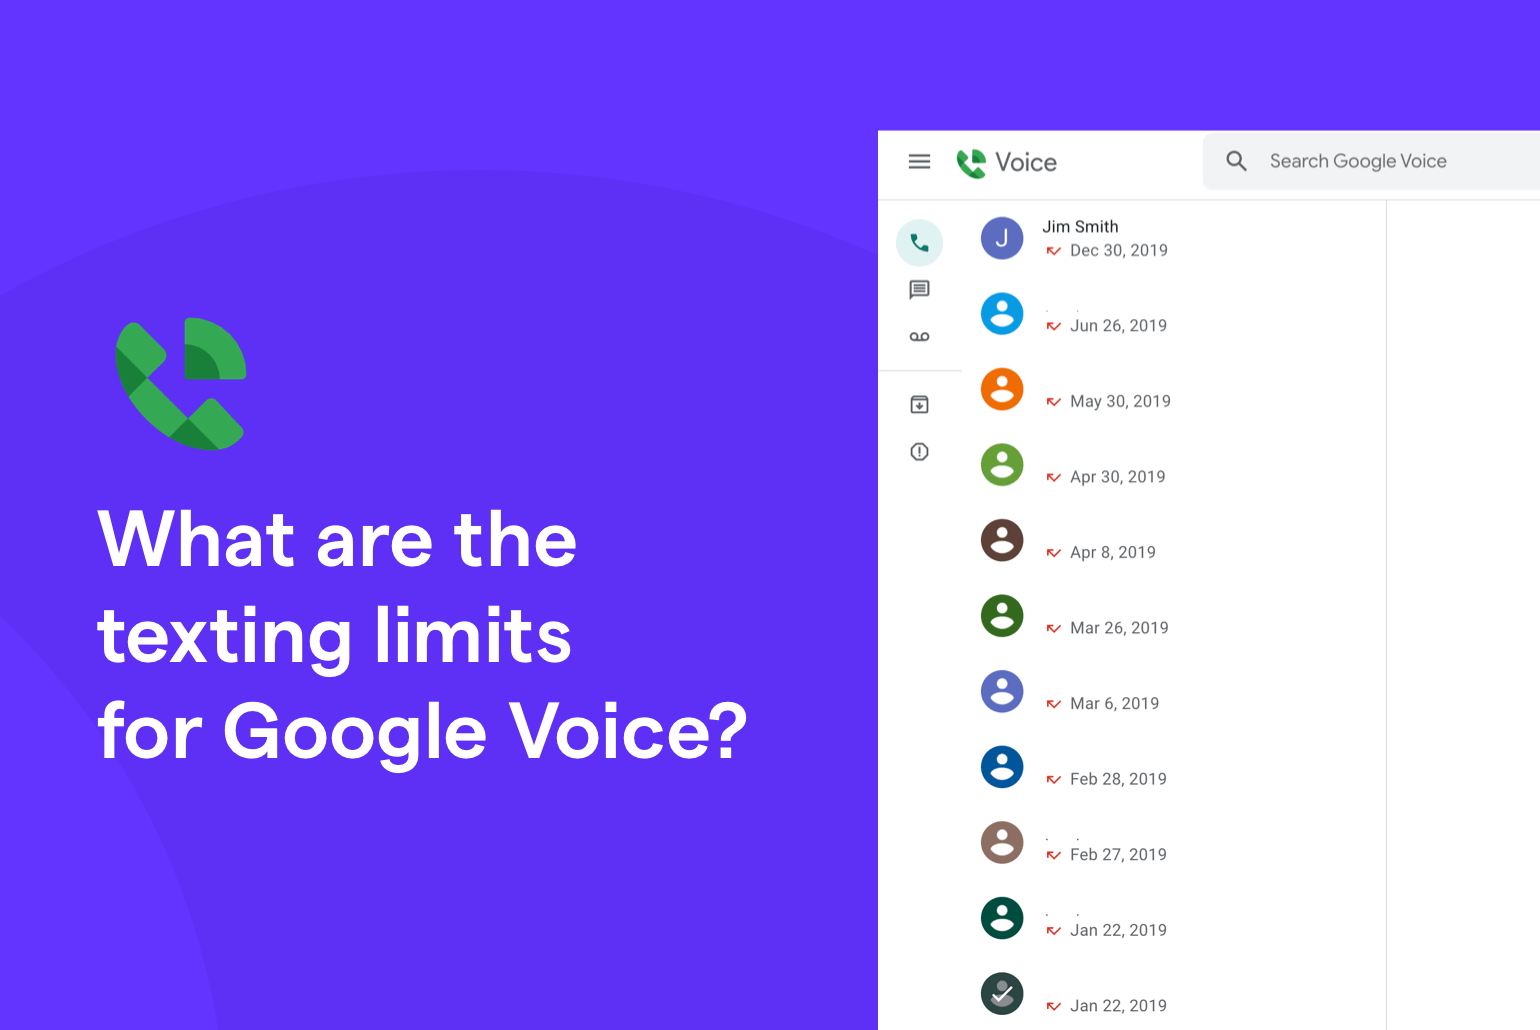 Google Voice texting limits